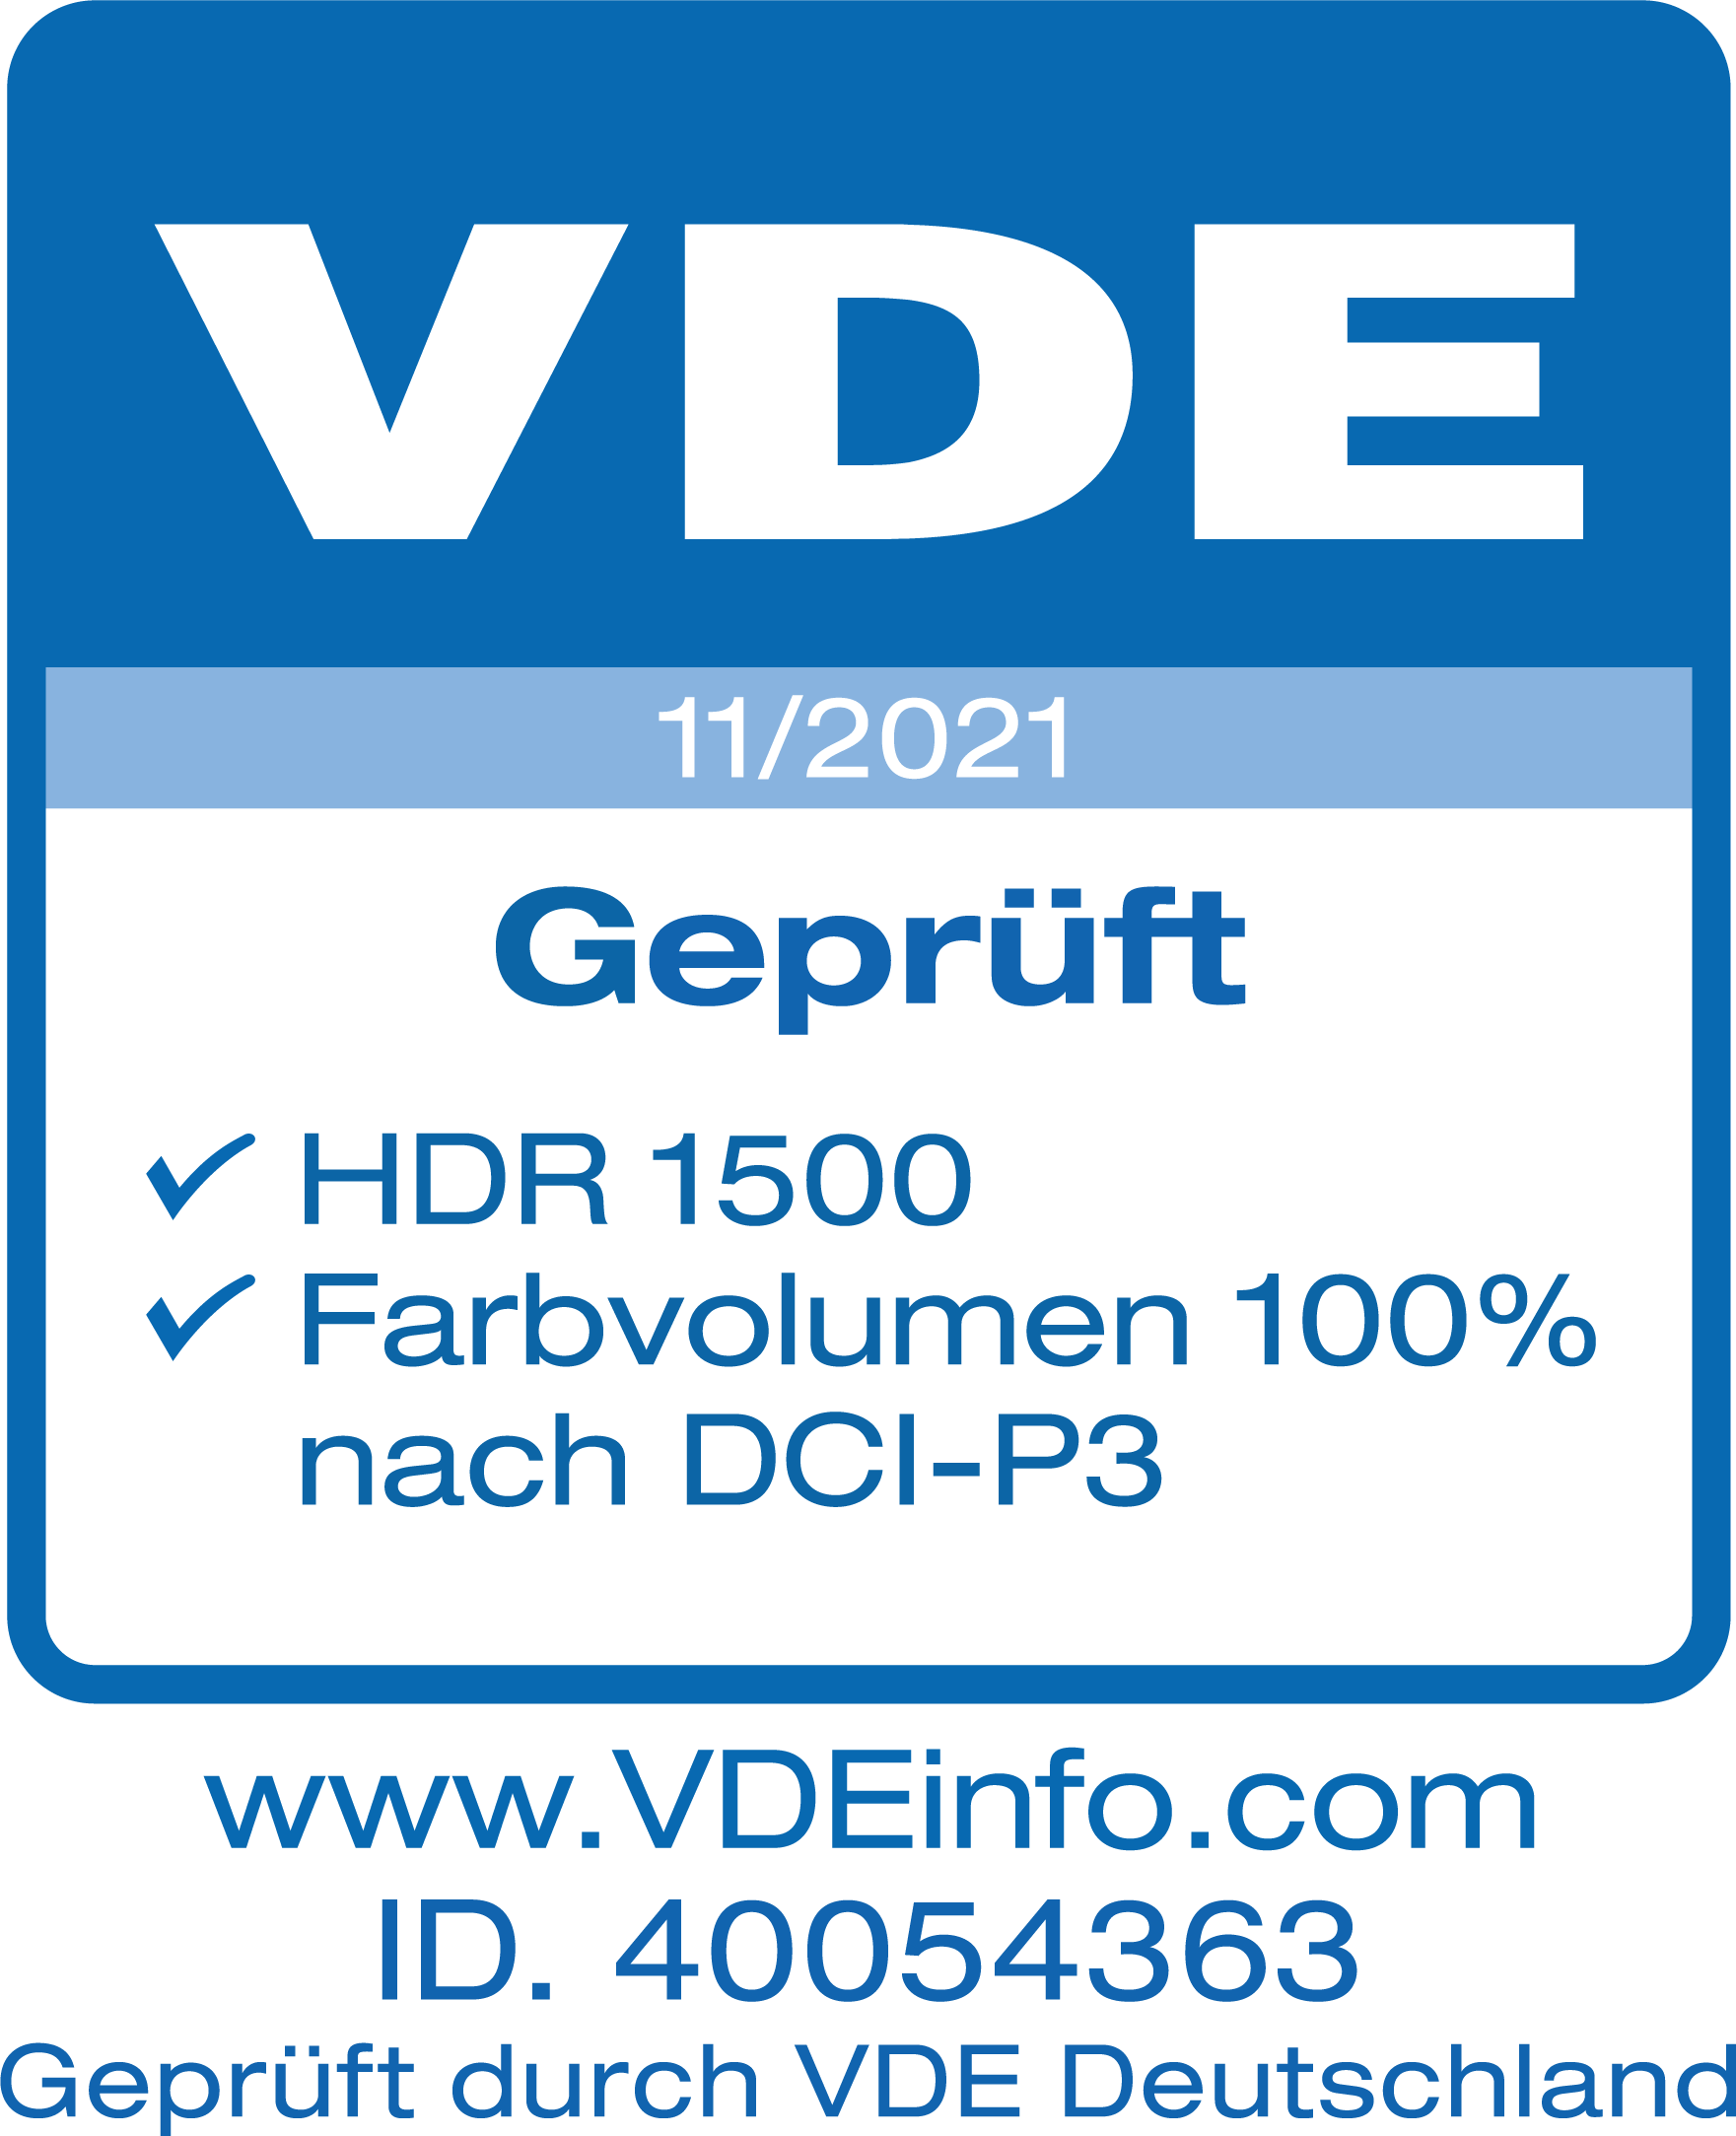 Zertifiziert vom Verband der Elektrotechnik Elektronik Informationstechnik e. V. (VDE), mehr unter: VDEinfo.com,  ID. 40054363, Modell: S95B.